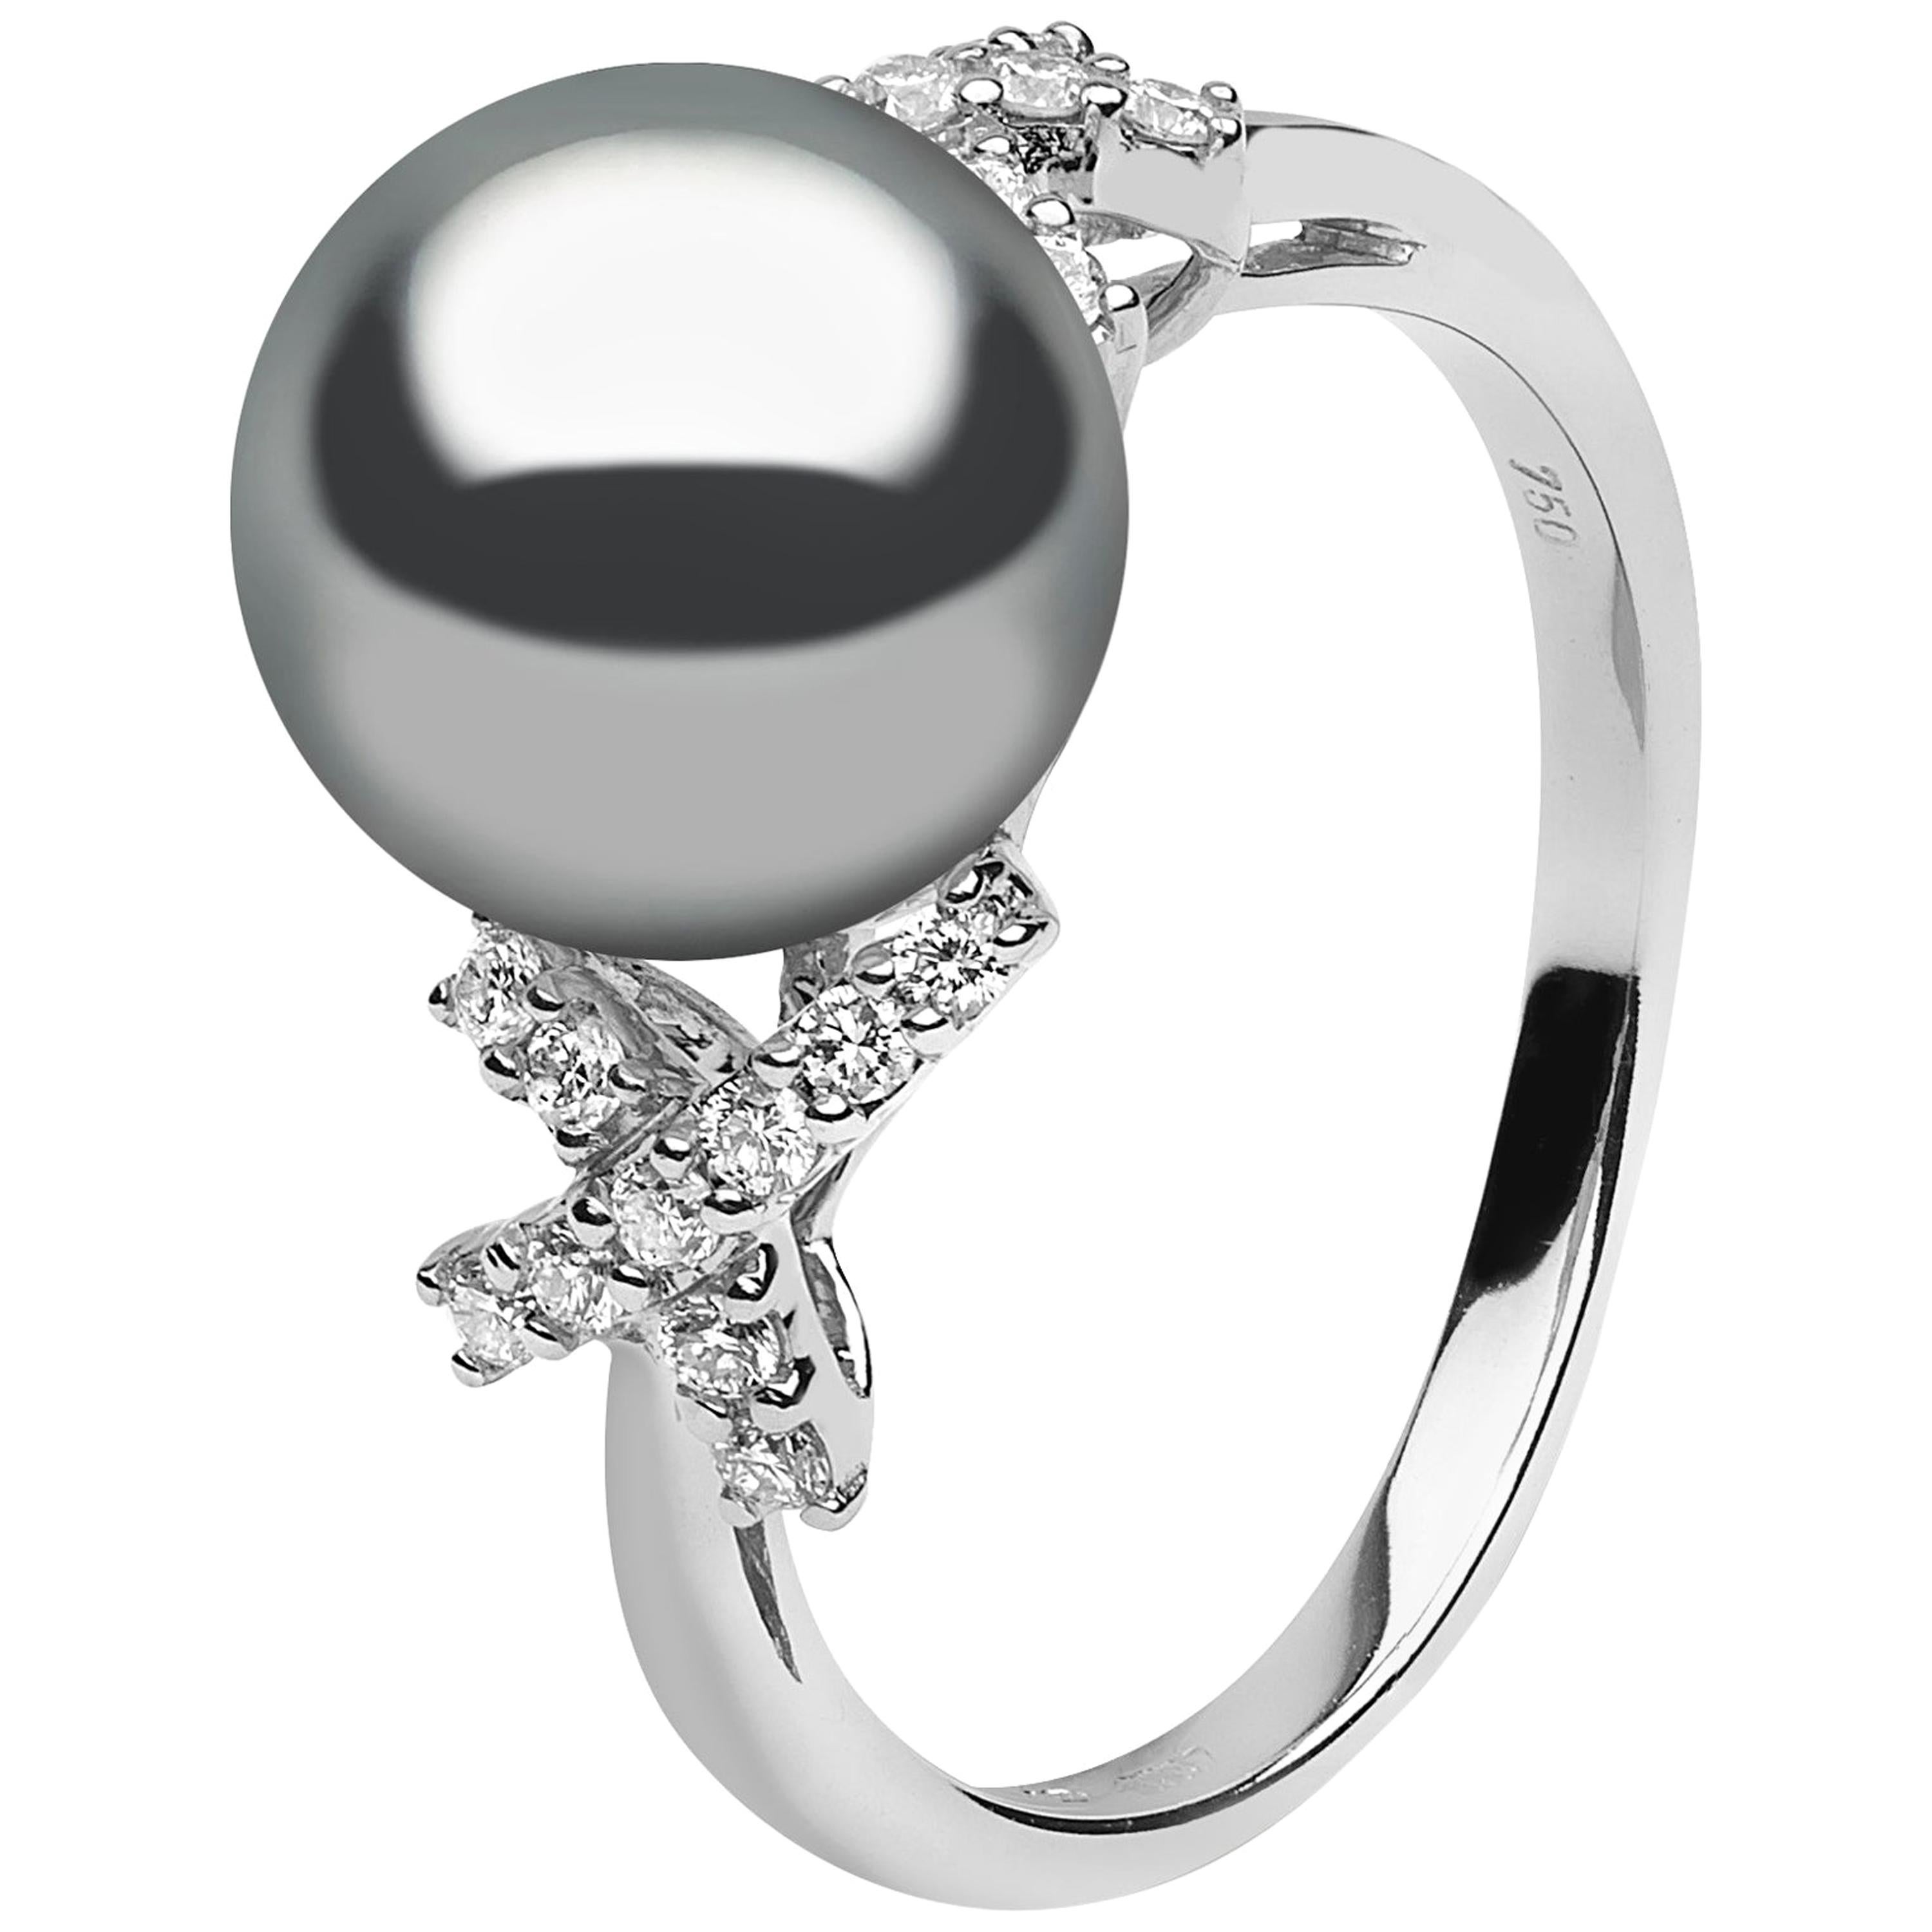 Yoko London Tahitian Pearl and Diamond Ring in 18 Karat White Gold